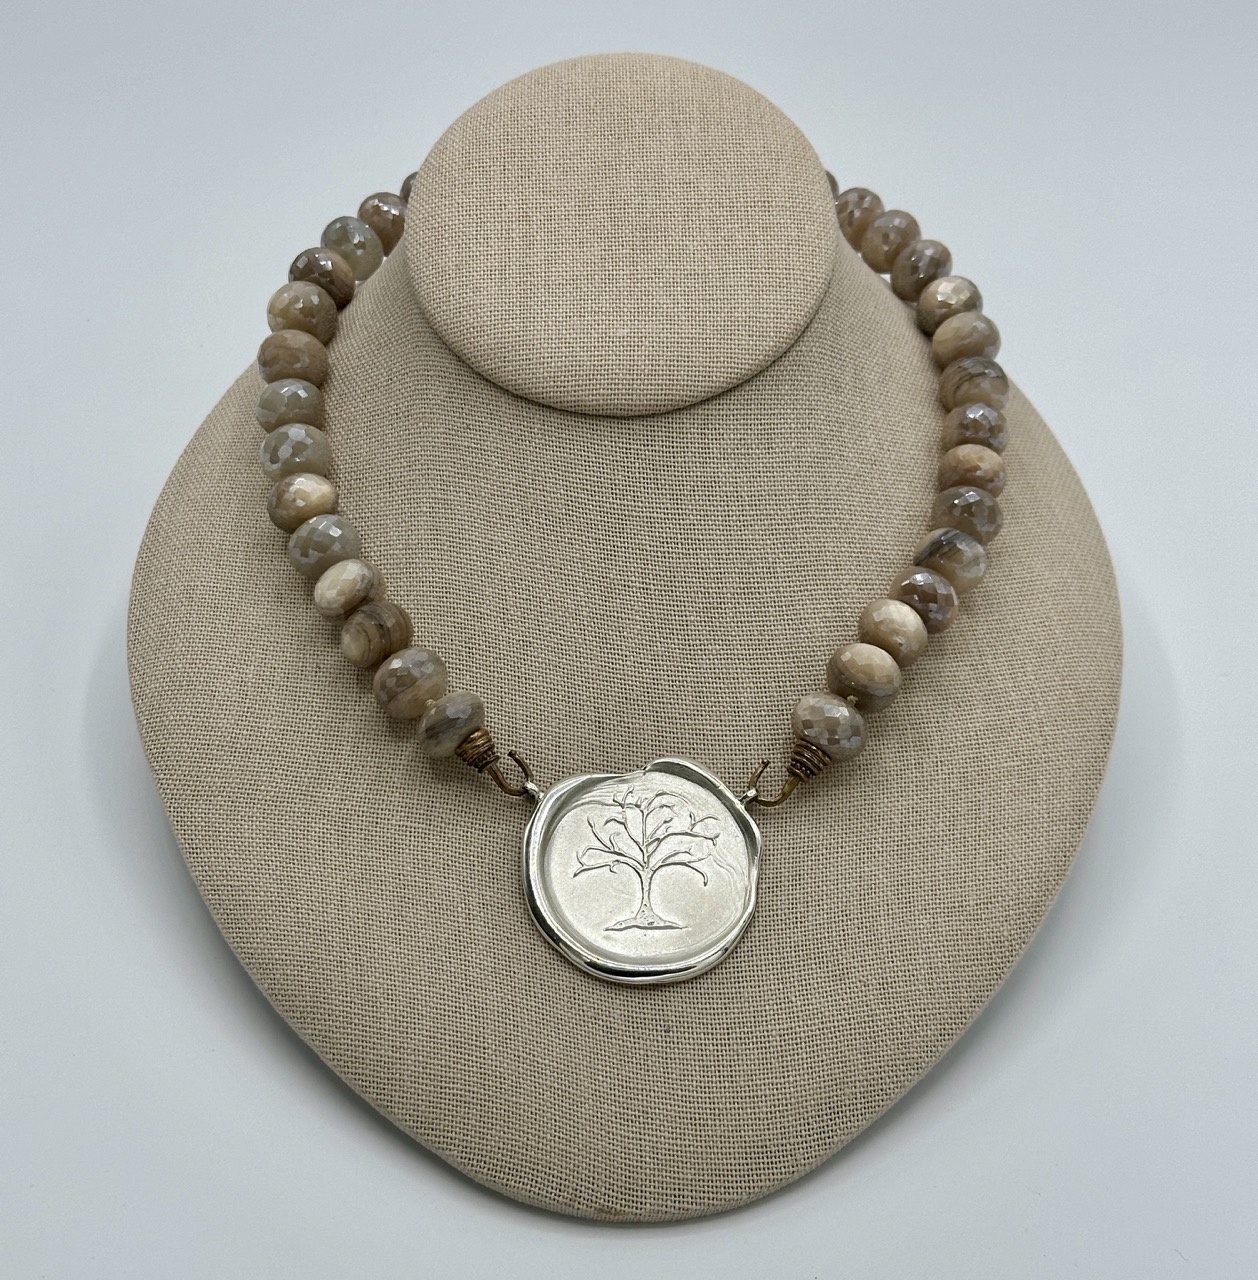 Large 15 mm Mystic Moonstone Rondell Beads on Hand Cast Bronze Hooks. Very unusual.